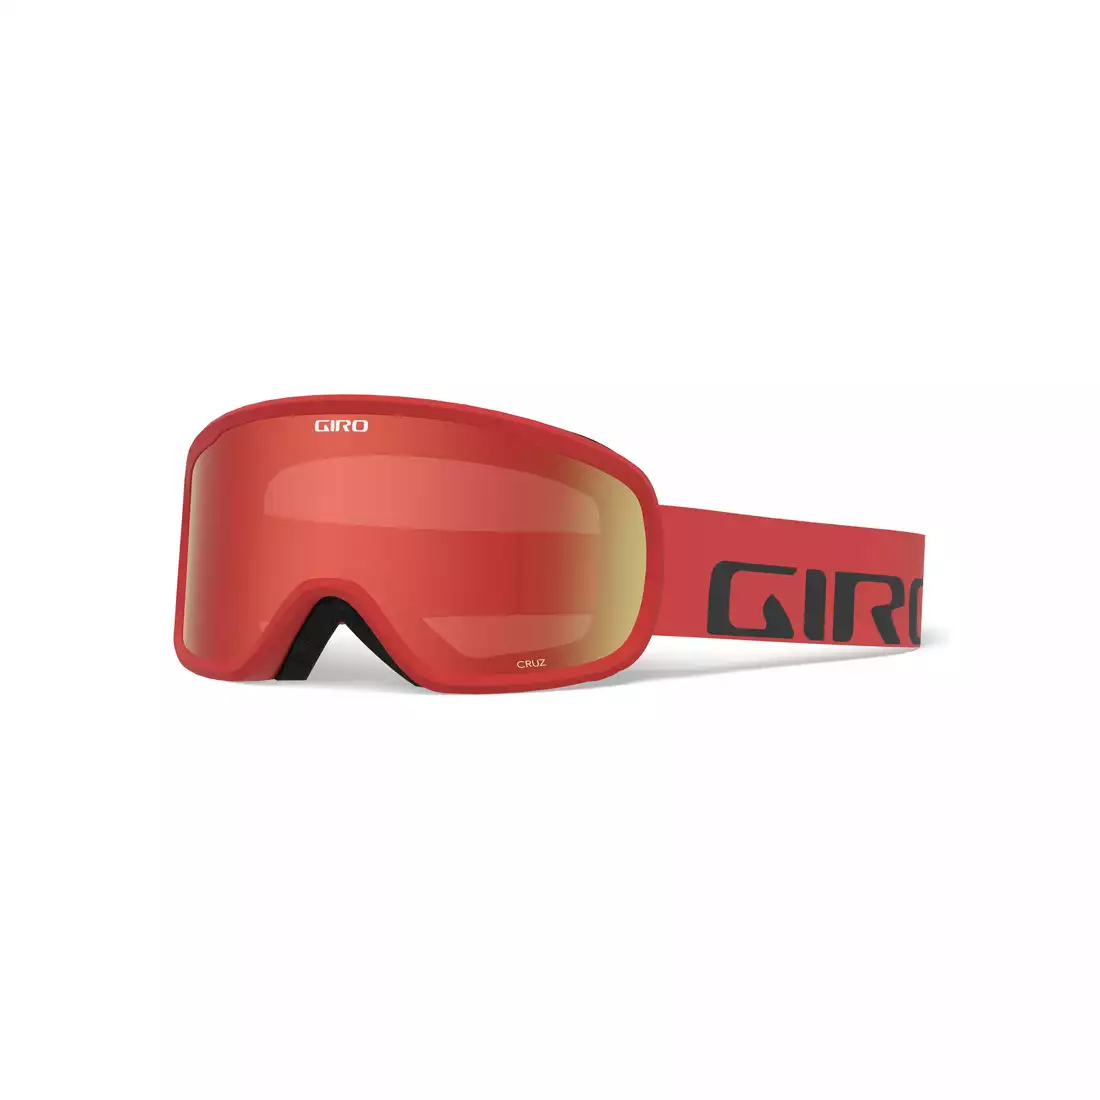 Gogle zimowe GIRO CRUZ RED WORDMARK - GR-7083045